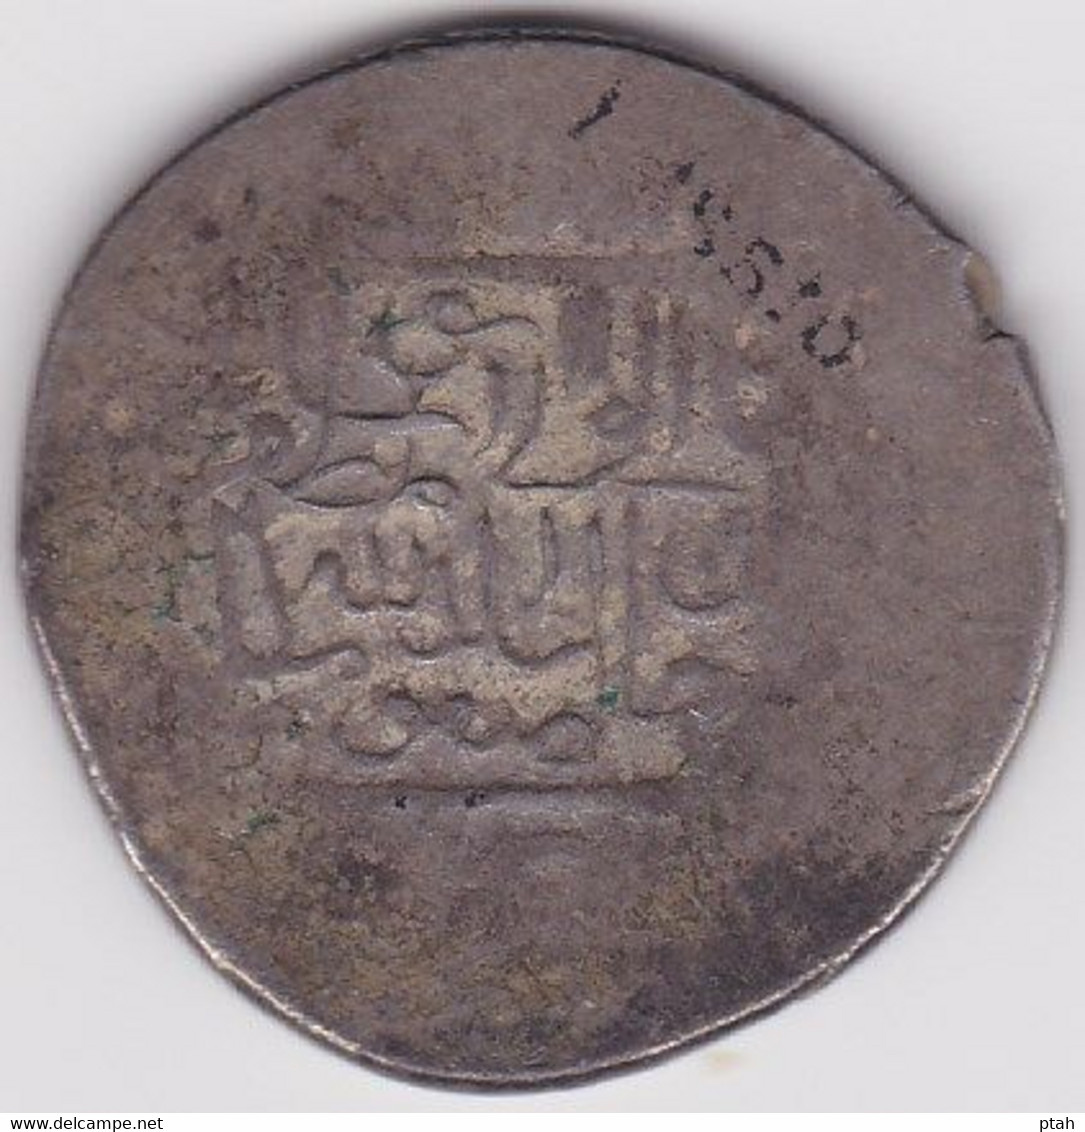 SAFAVID, Isma'il I, Shahi N.d. - Islamic